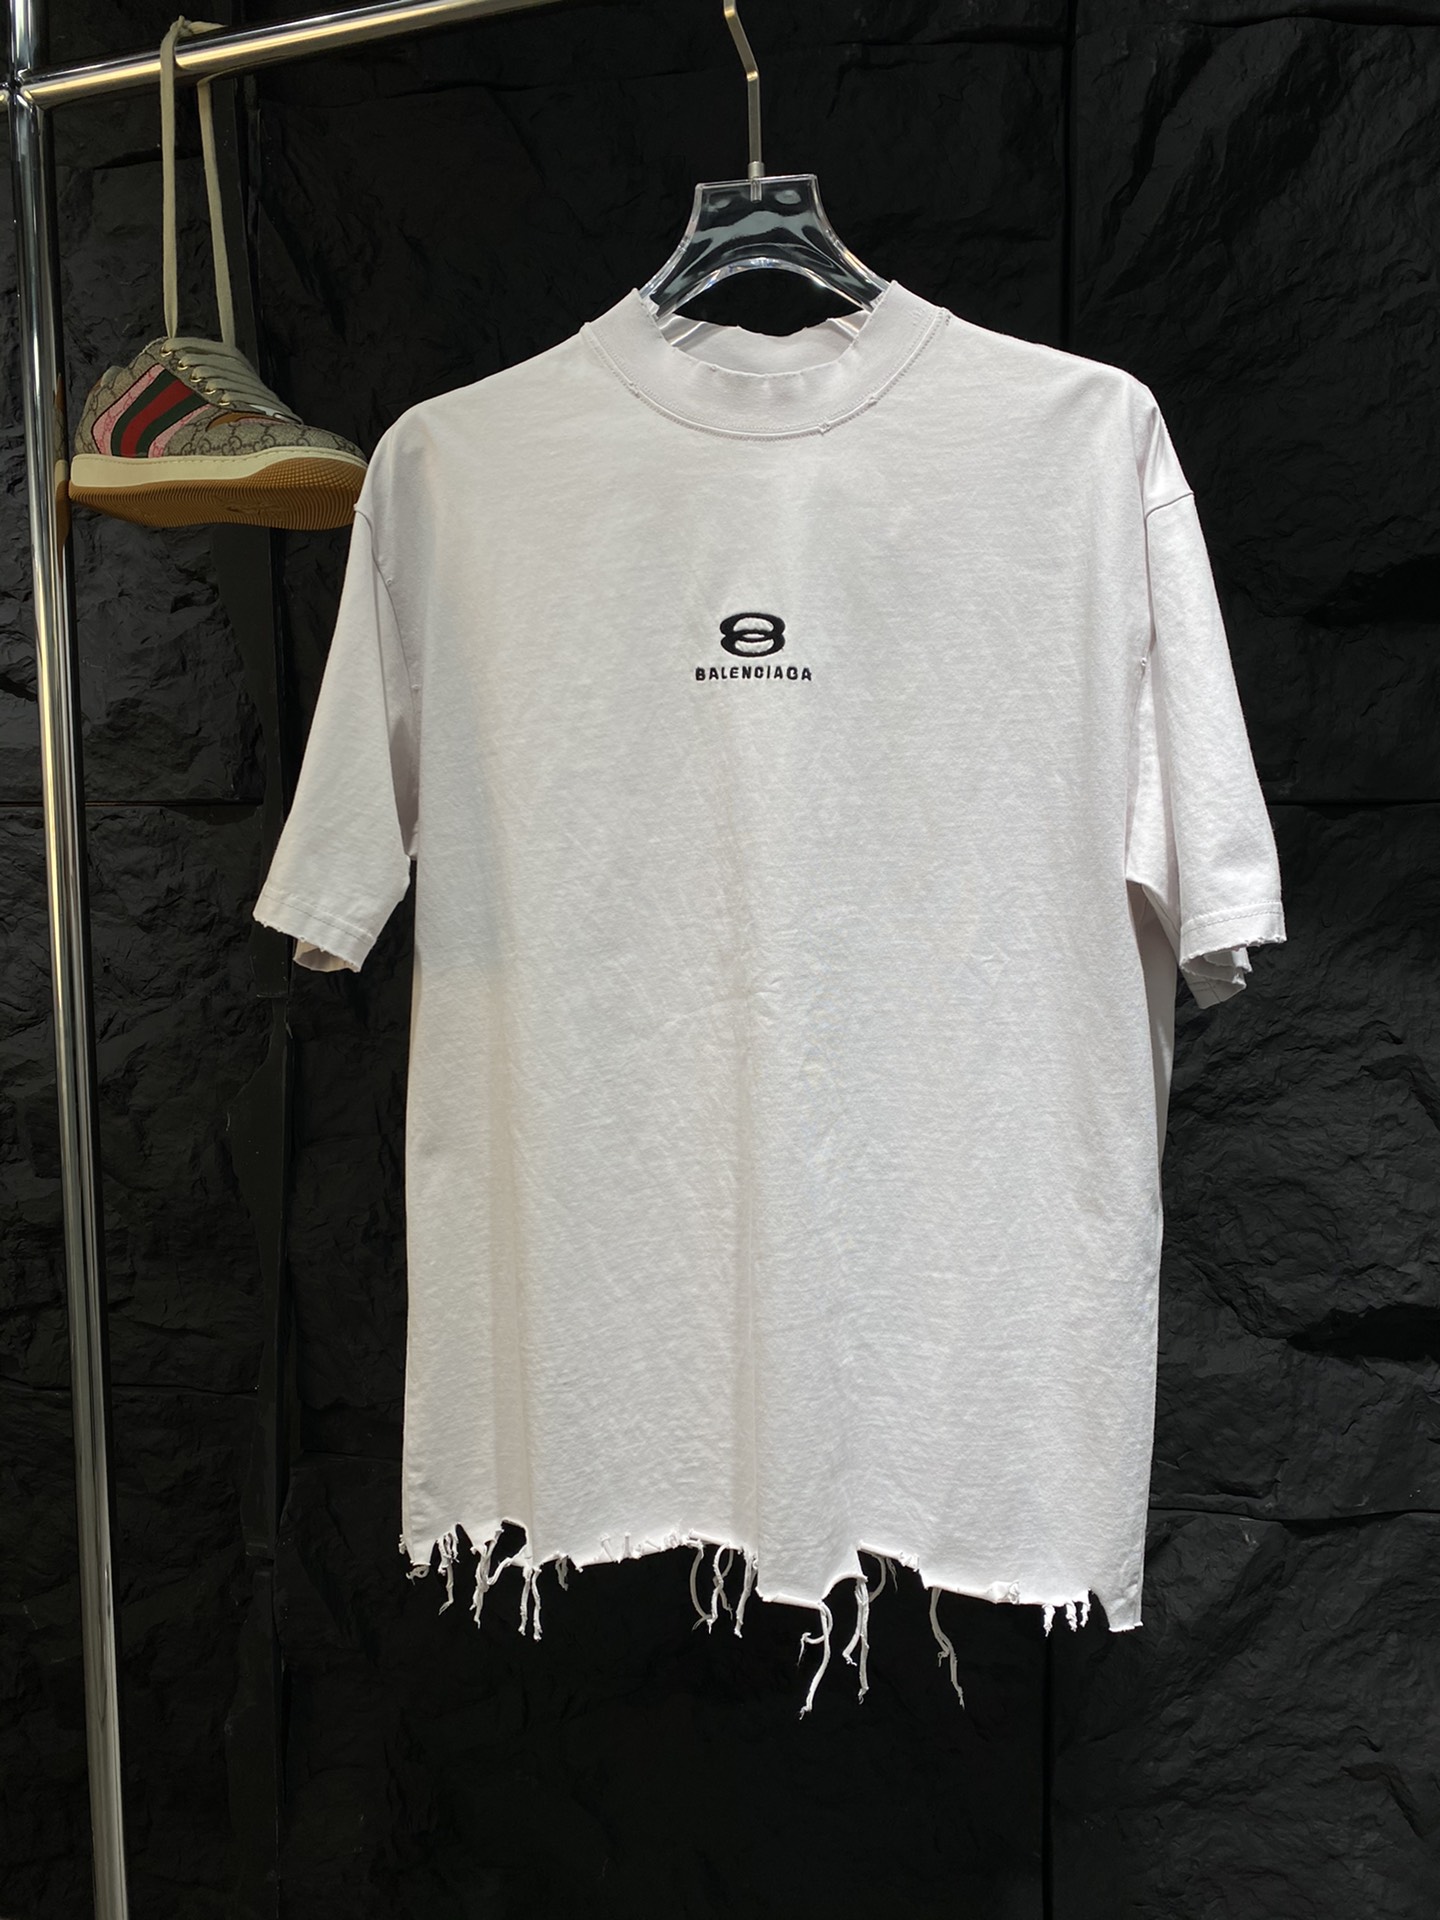 Balenciaga Kleding T-Shirt Exclusief goedkoop
 Borduurwerk Unisex Katoen Lentecollectie